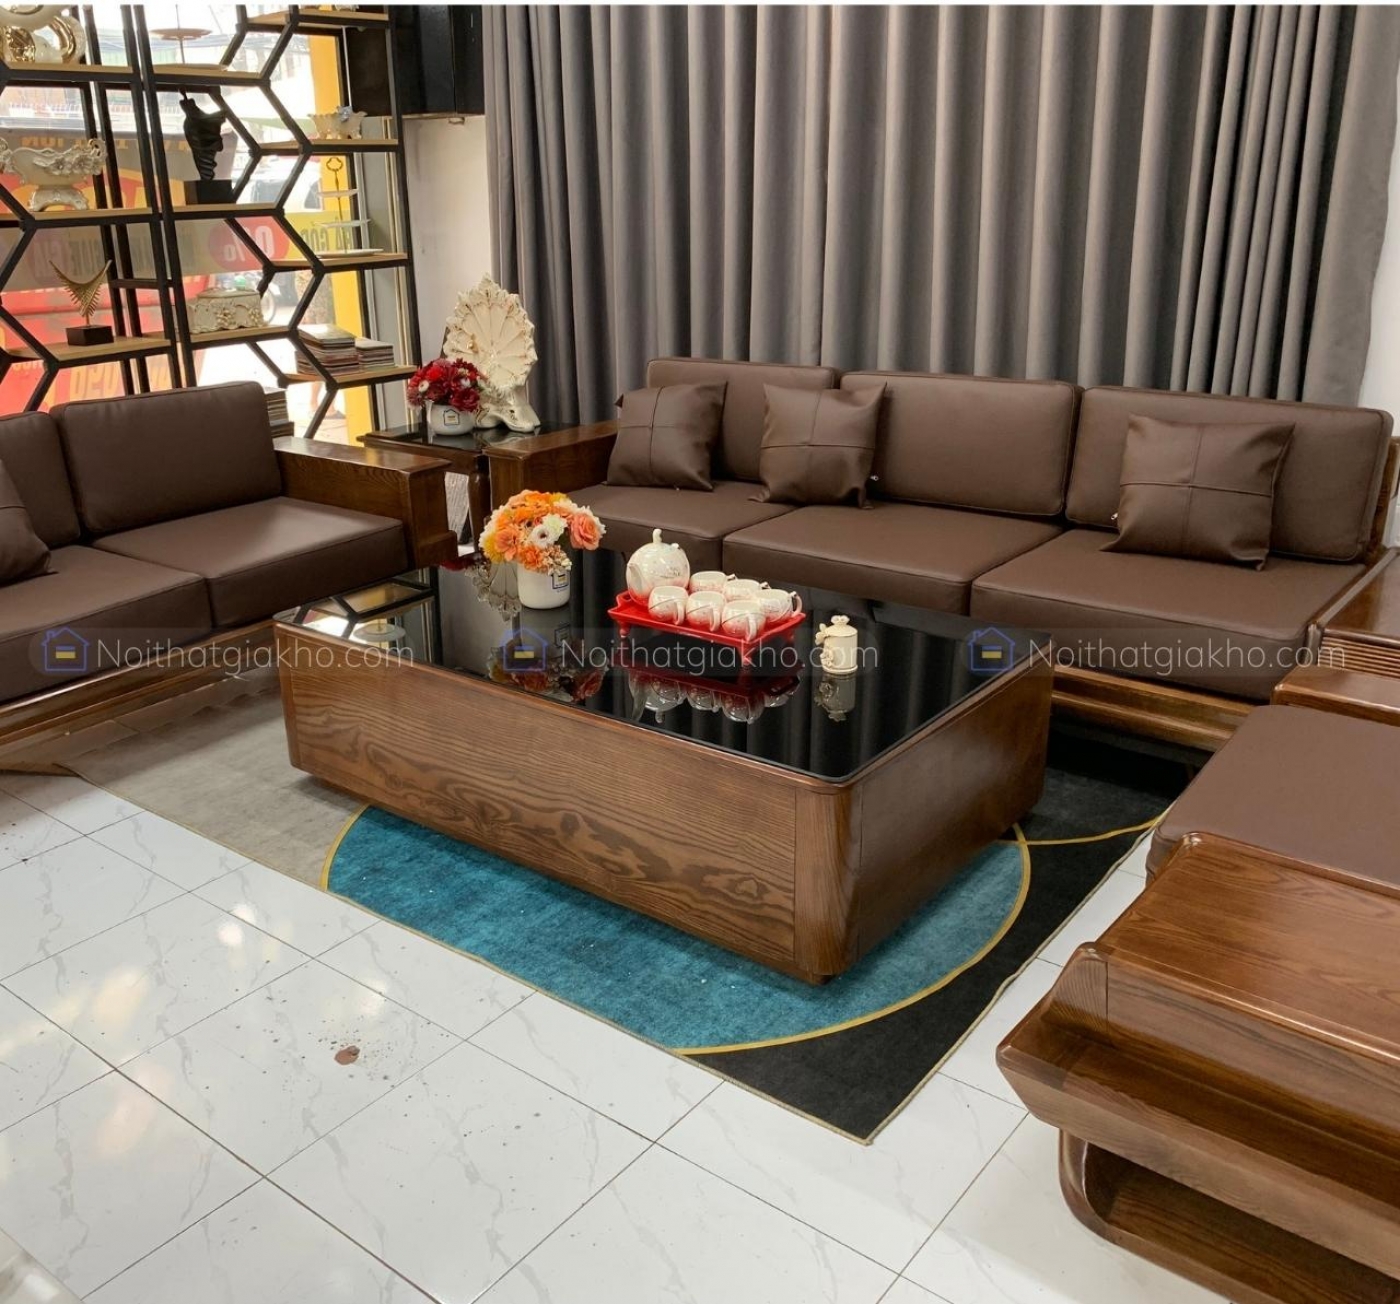 Sofa gỗ sồi tự nhiên cao cấp GK45